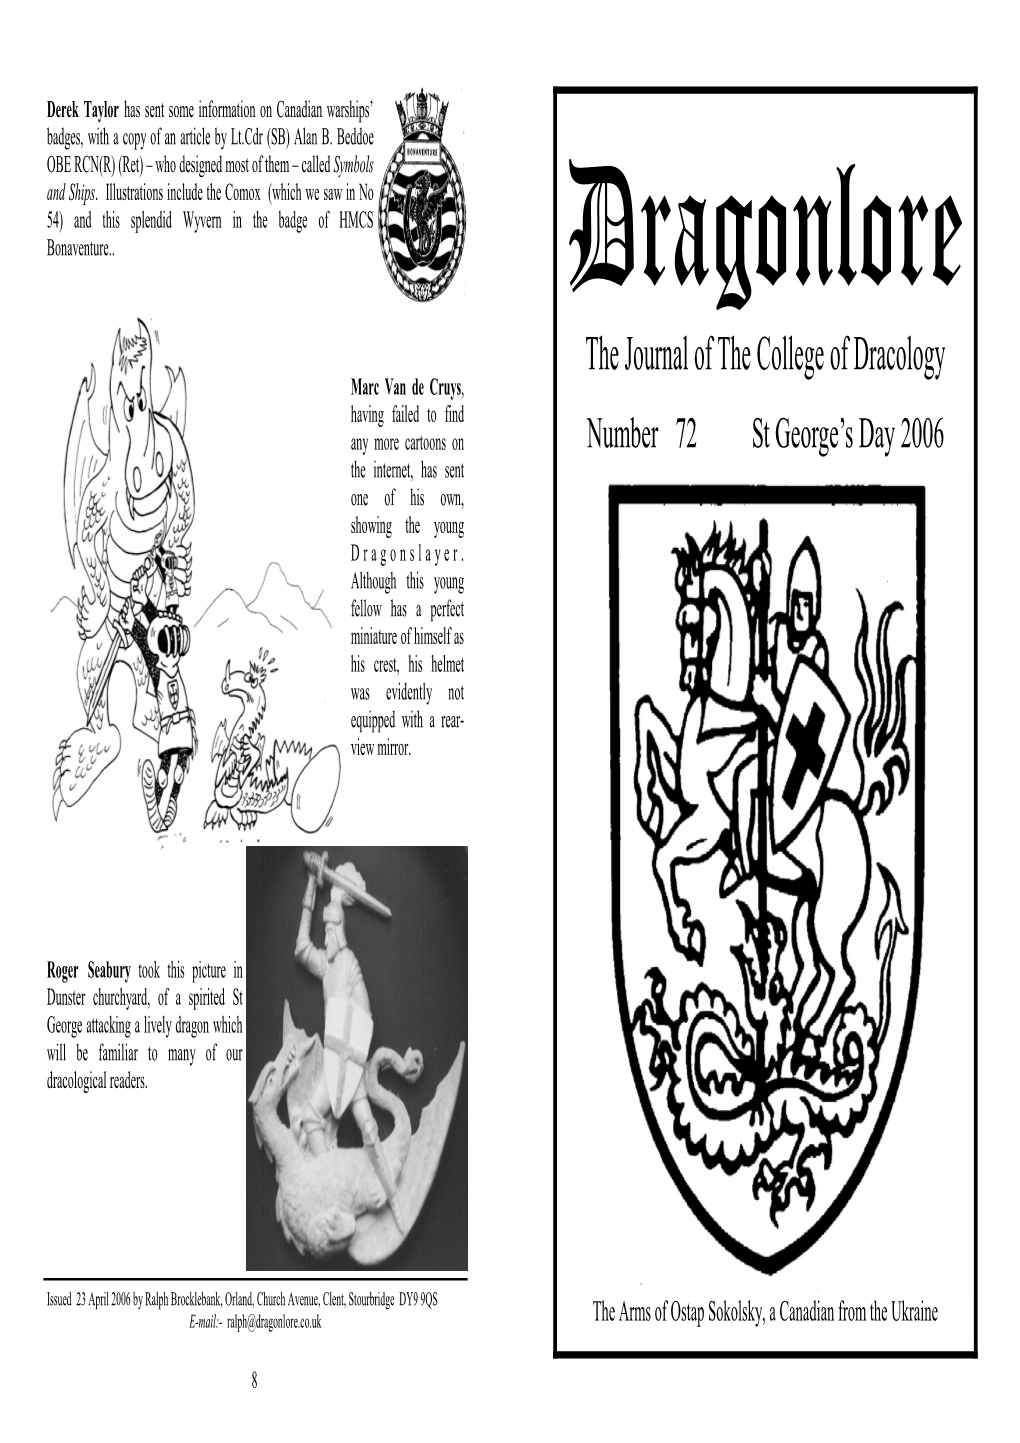 Dragonlore Issue 72 06-05-06